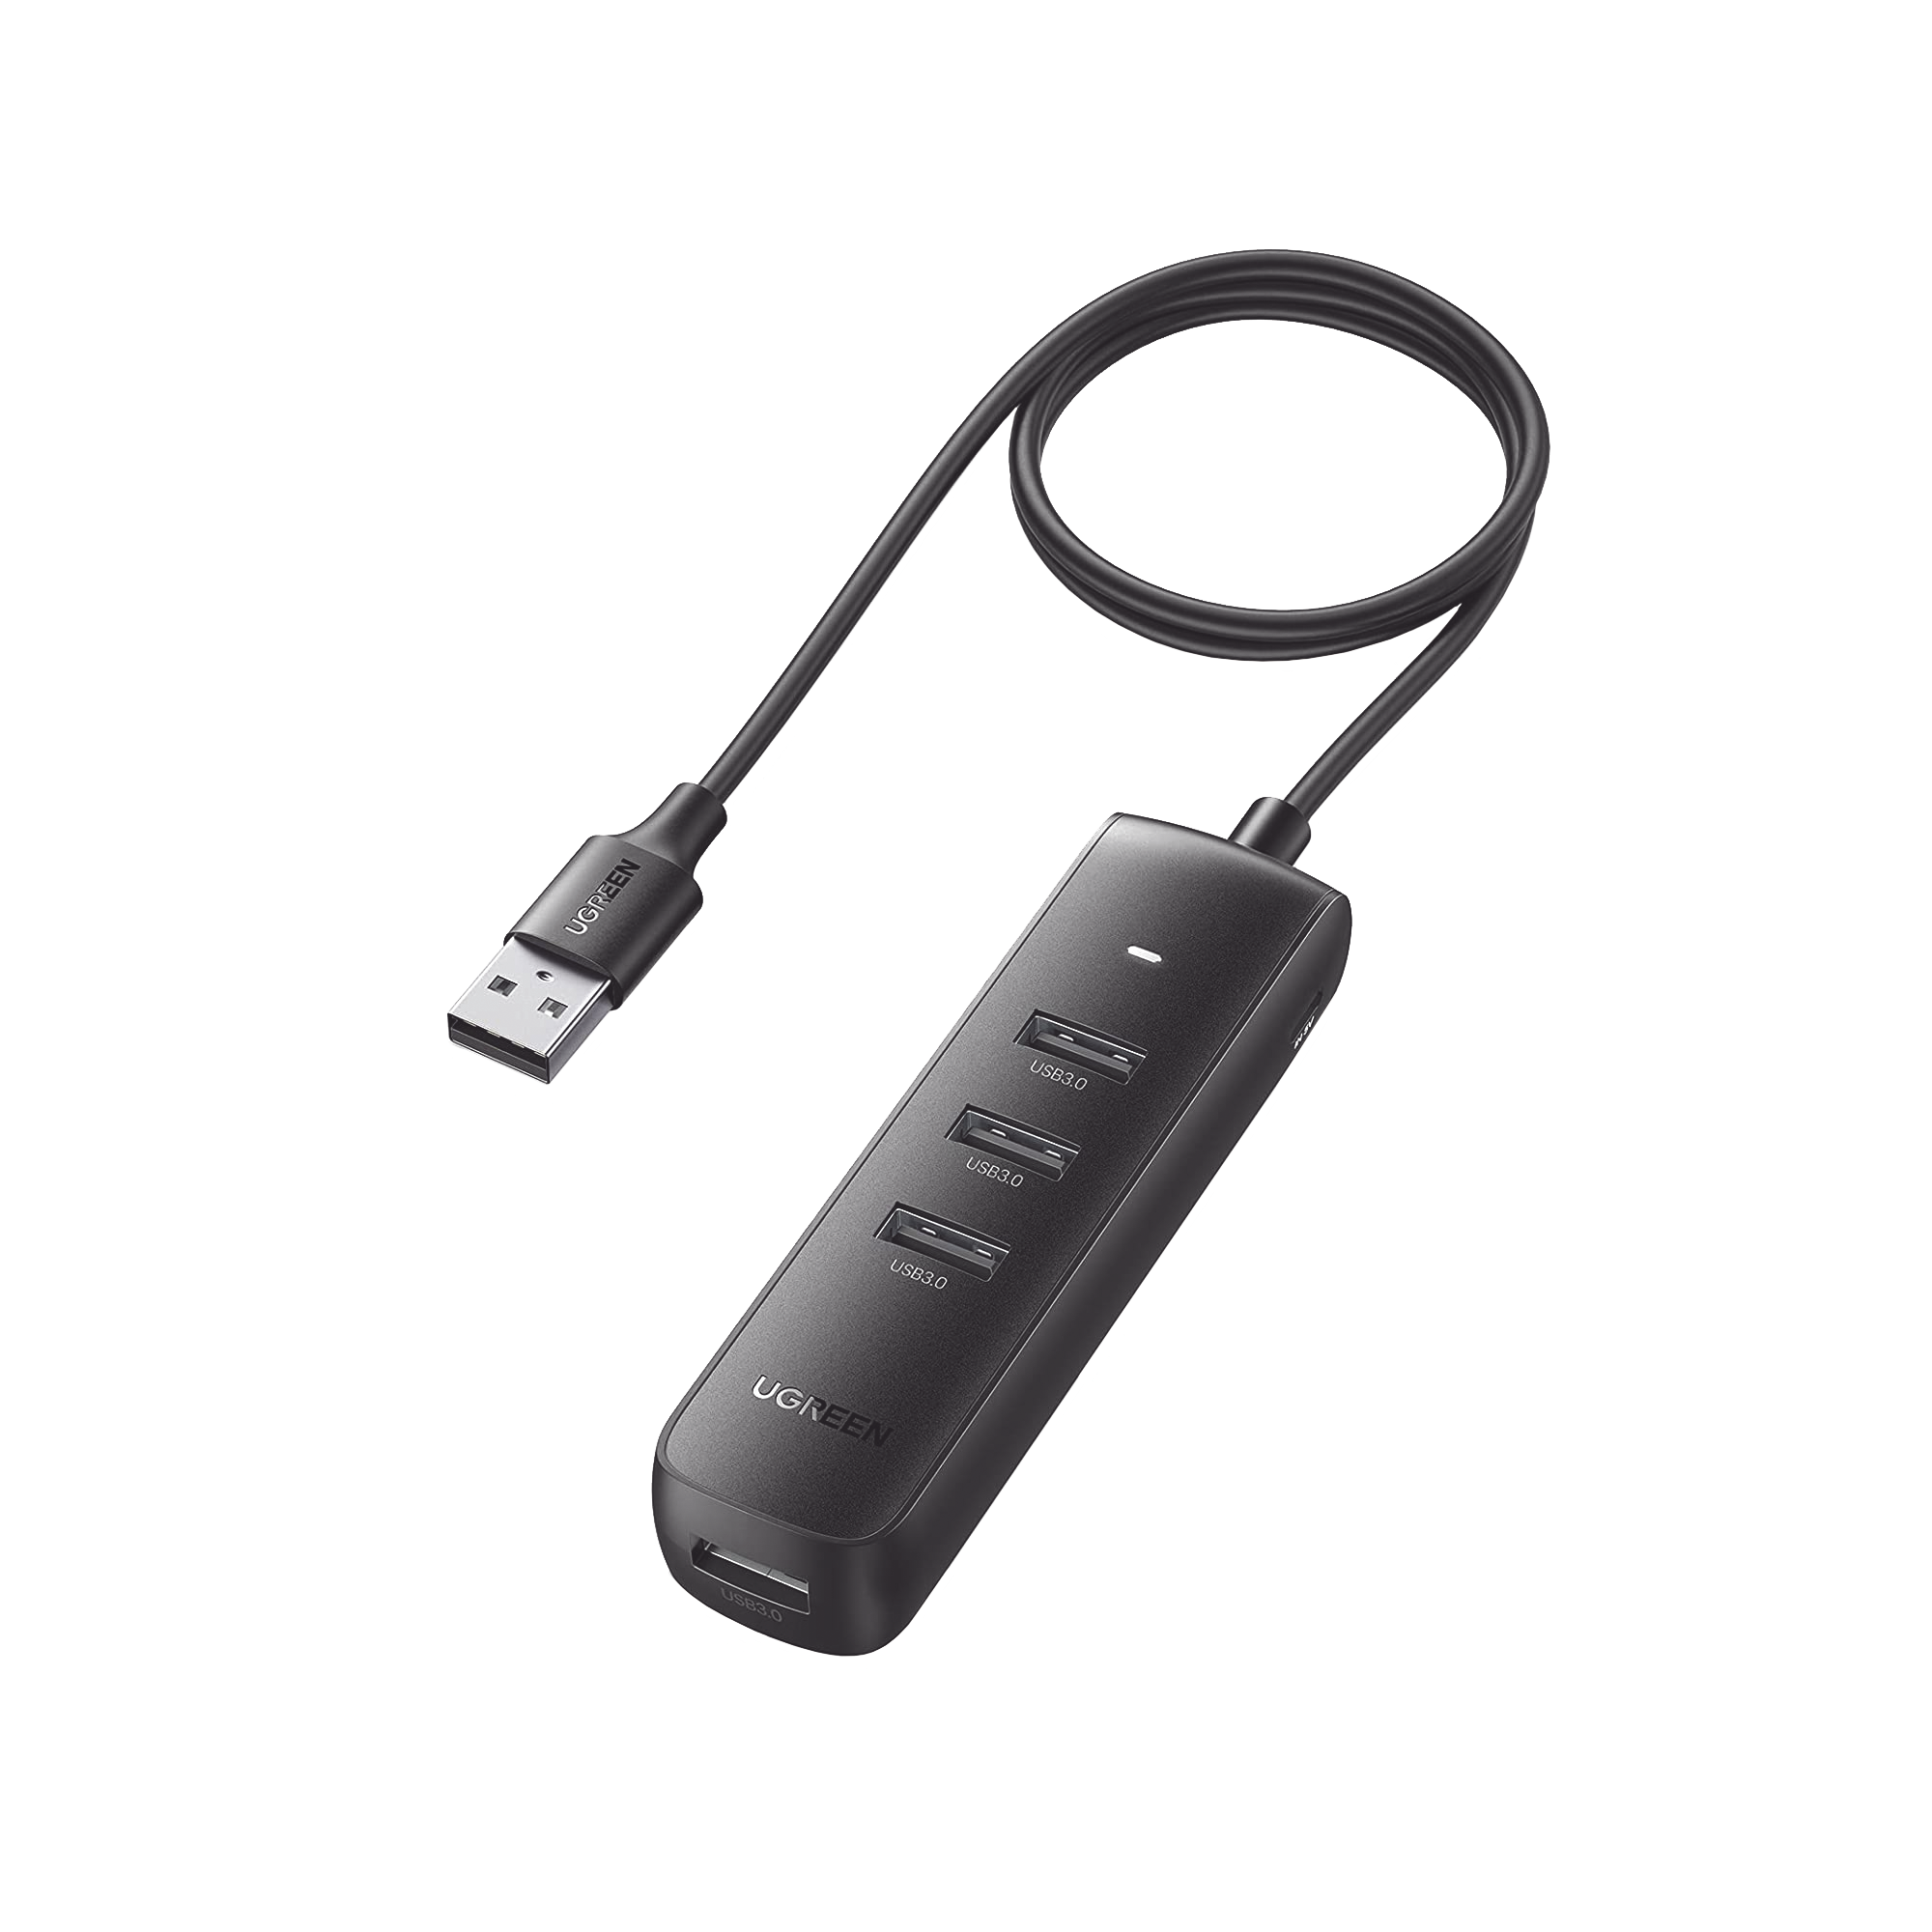 HUB USB 3.0 a 4 Puertos USB 3.0 (5Gbps) / Cable de 1 Metro / Indicador Led / Ideal para Transferencia de Datos / Entrada Tipo C para alimentar equipos de mayor consumo como discos duros / Color Negro / 4 en 1